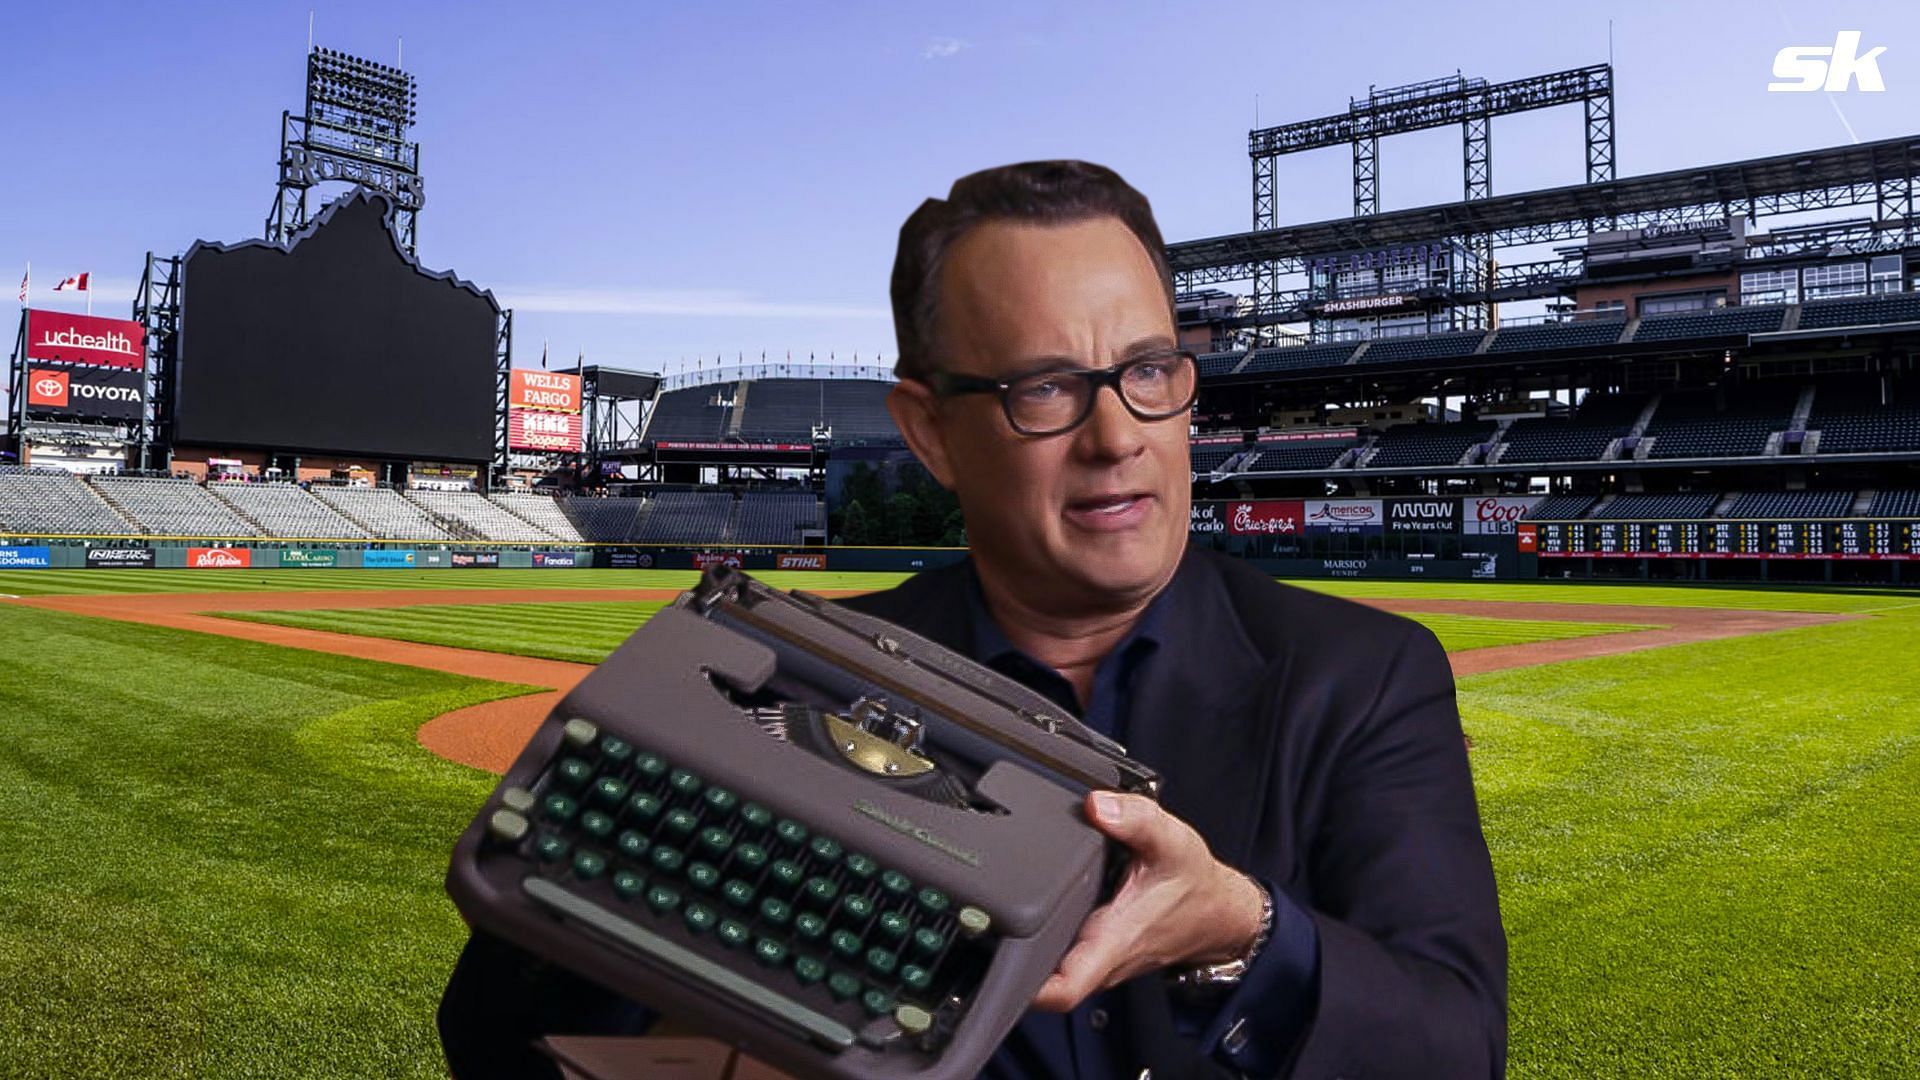 Tom Hanks used to bring a typewriter to baseball games